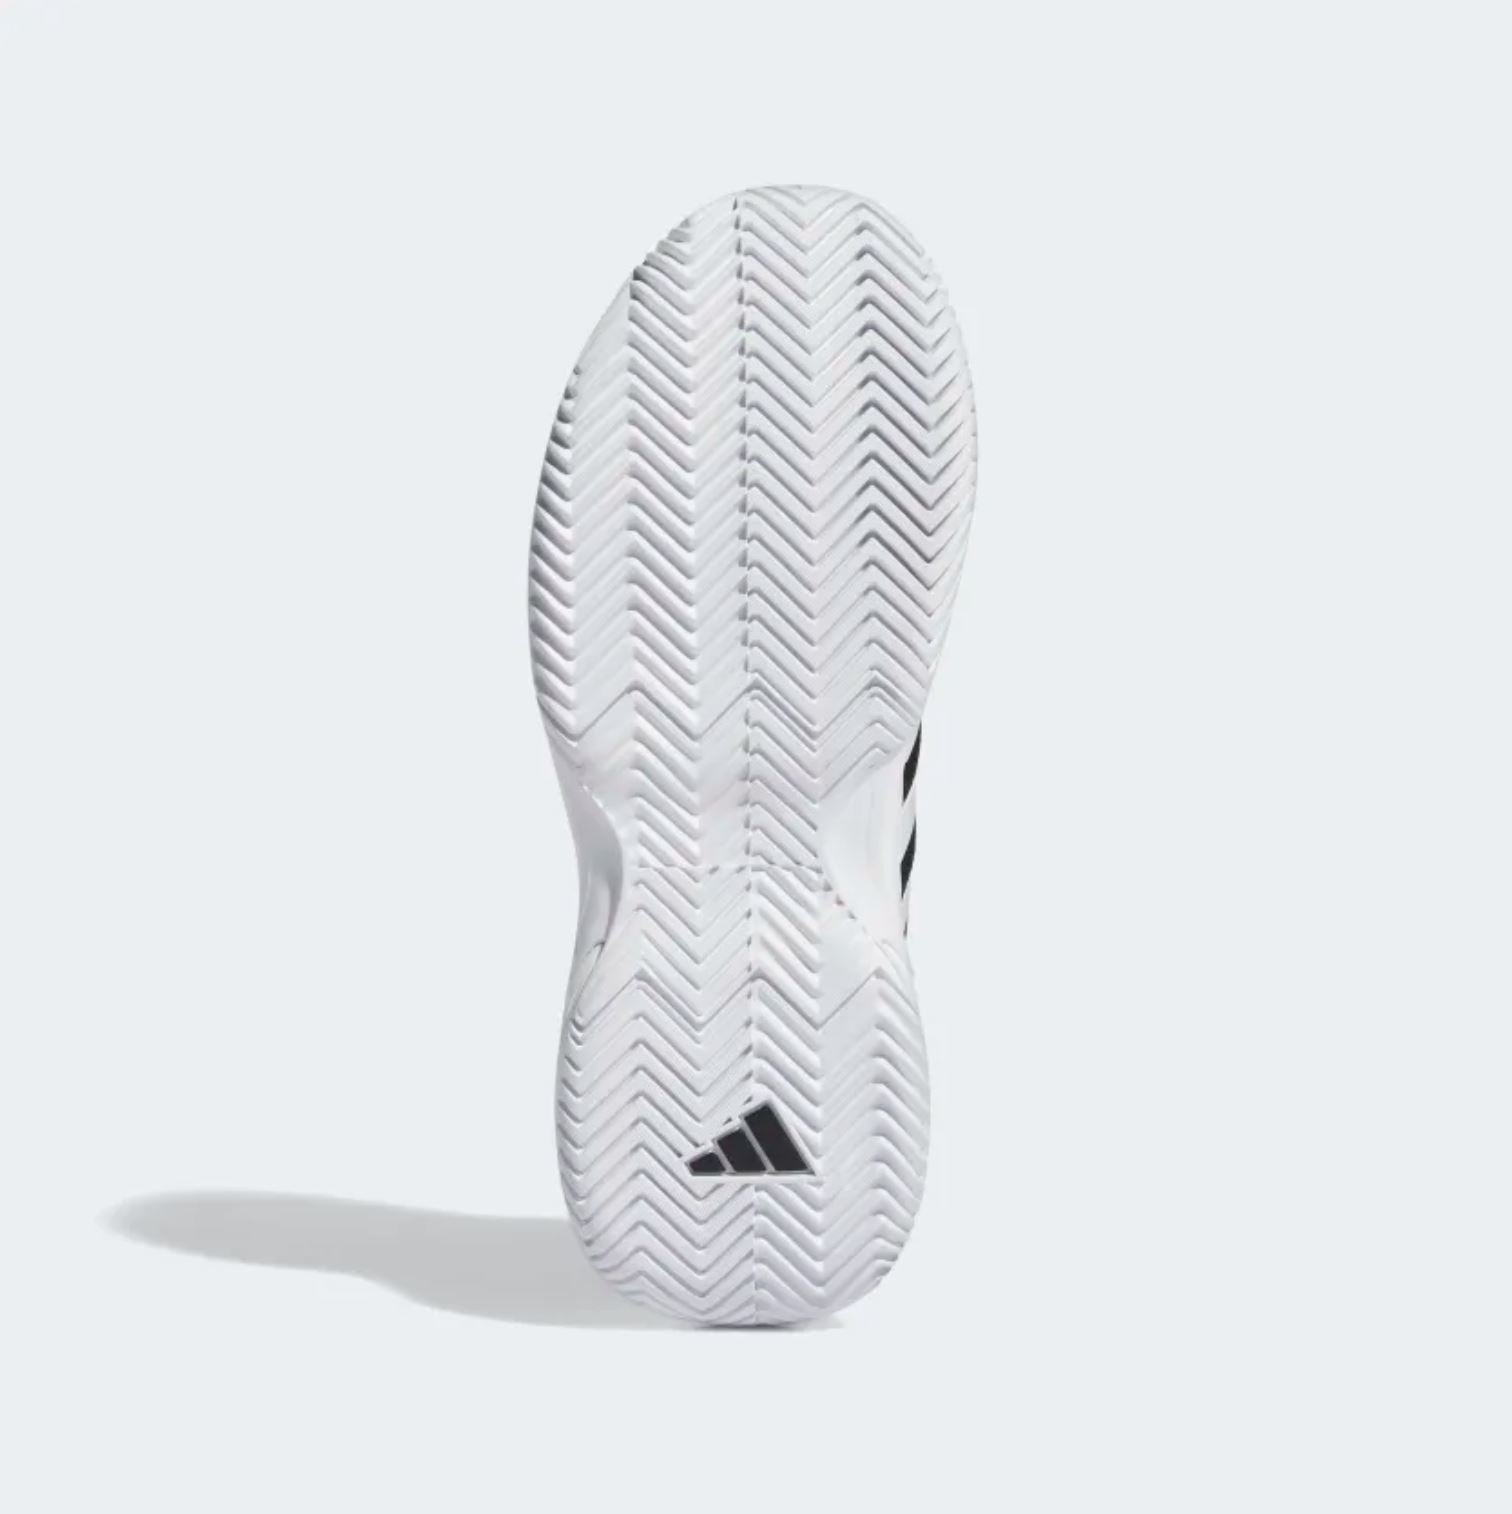 Adidas Gamecourt 2 Padel Shoes (Womens, Black/White)